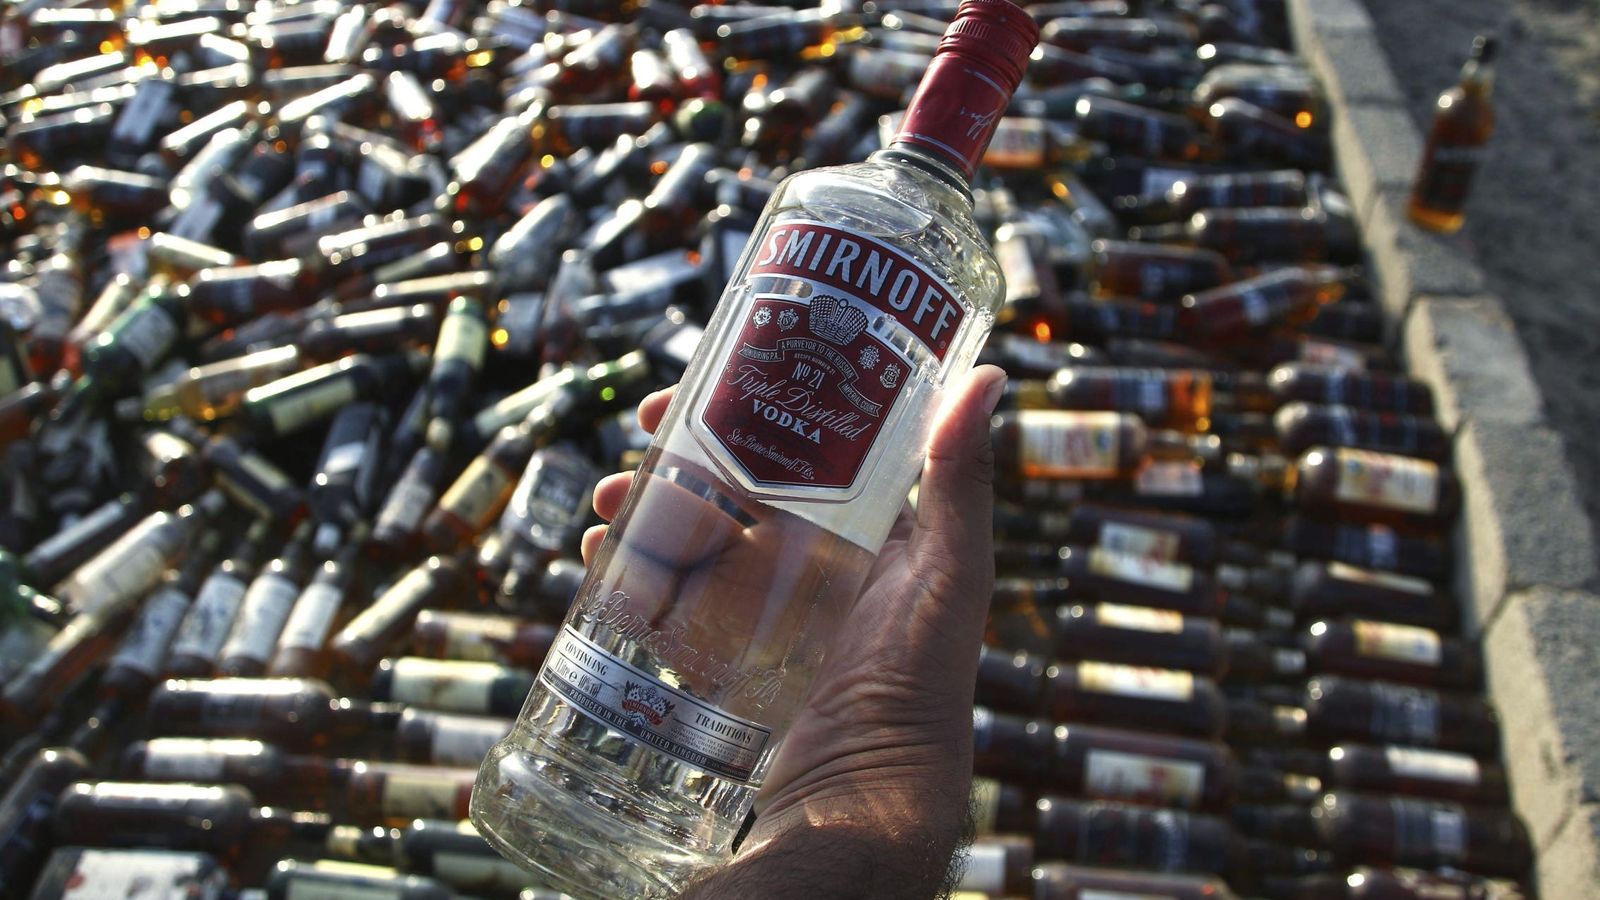 Foto: Una botella de alohol ilegale incautada, a punto de ser destruida. (Efe)